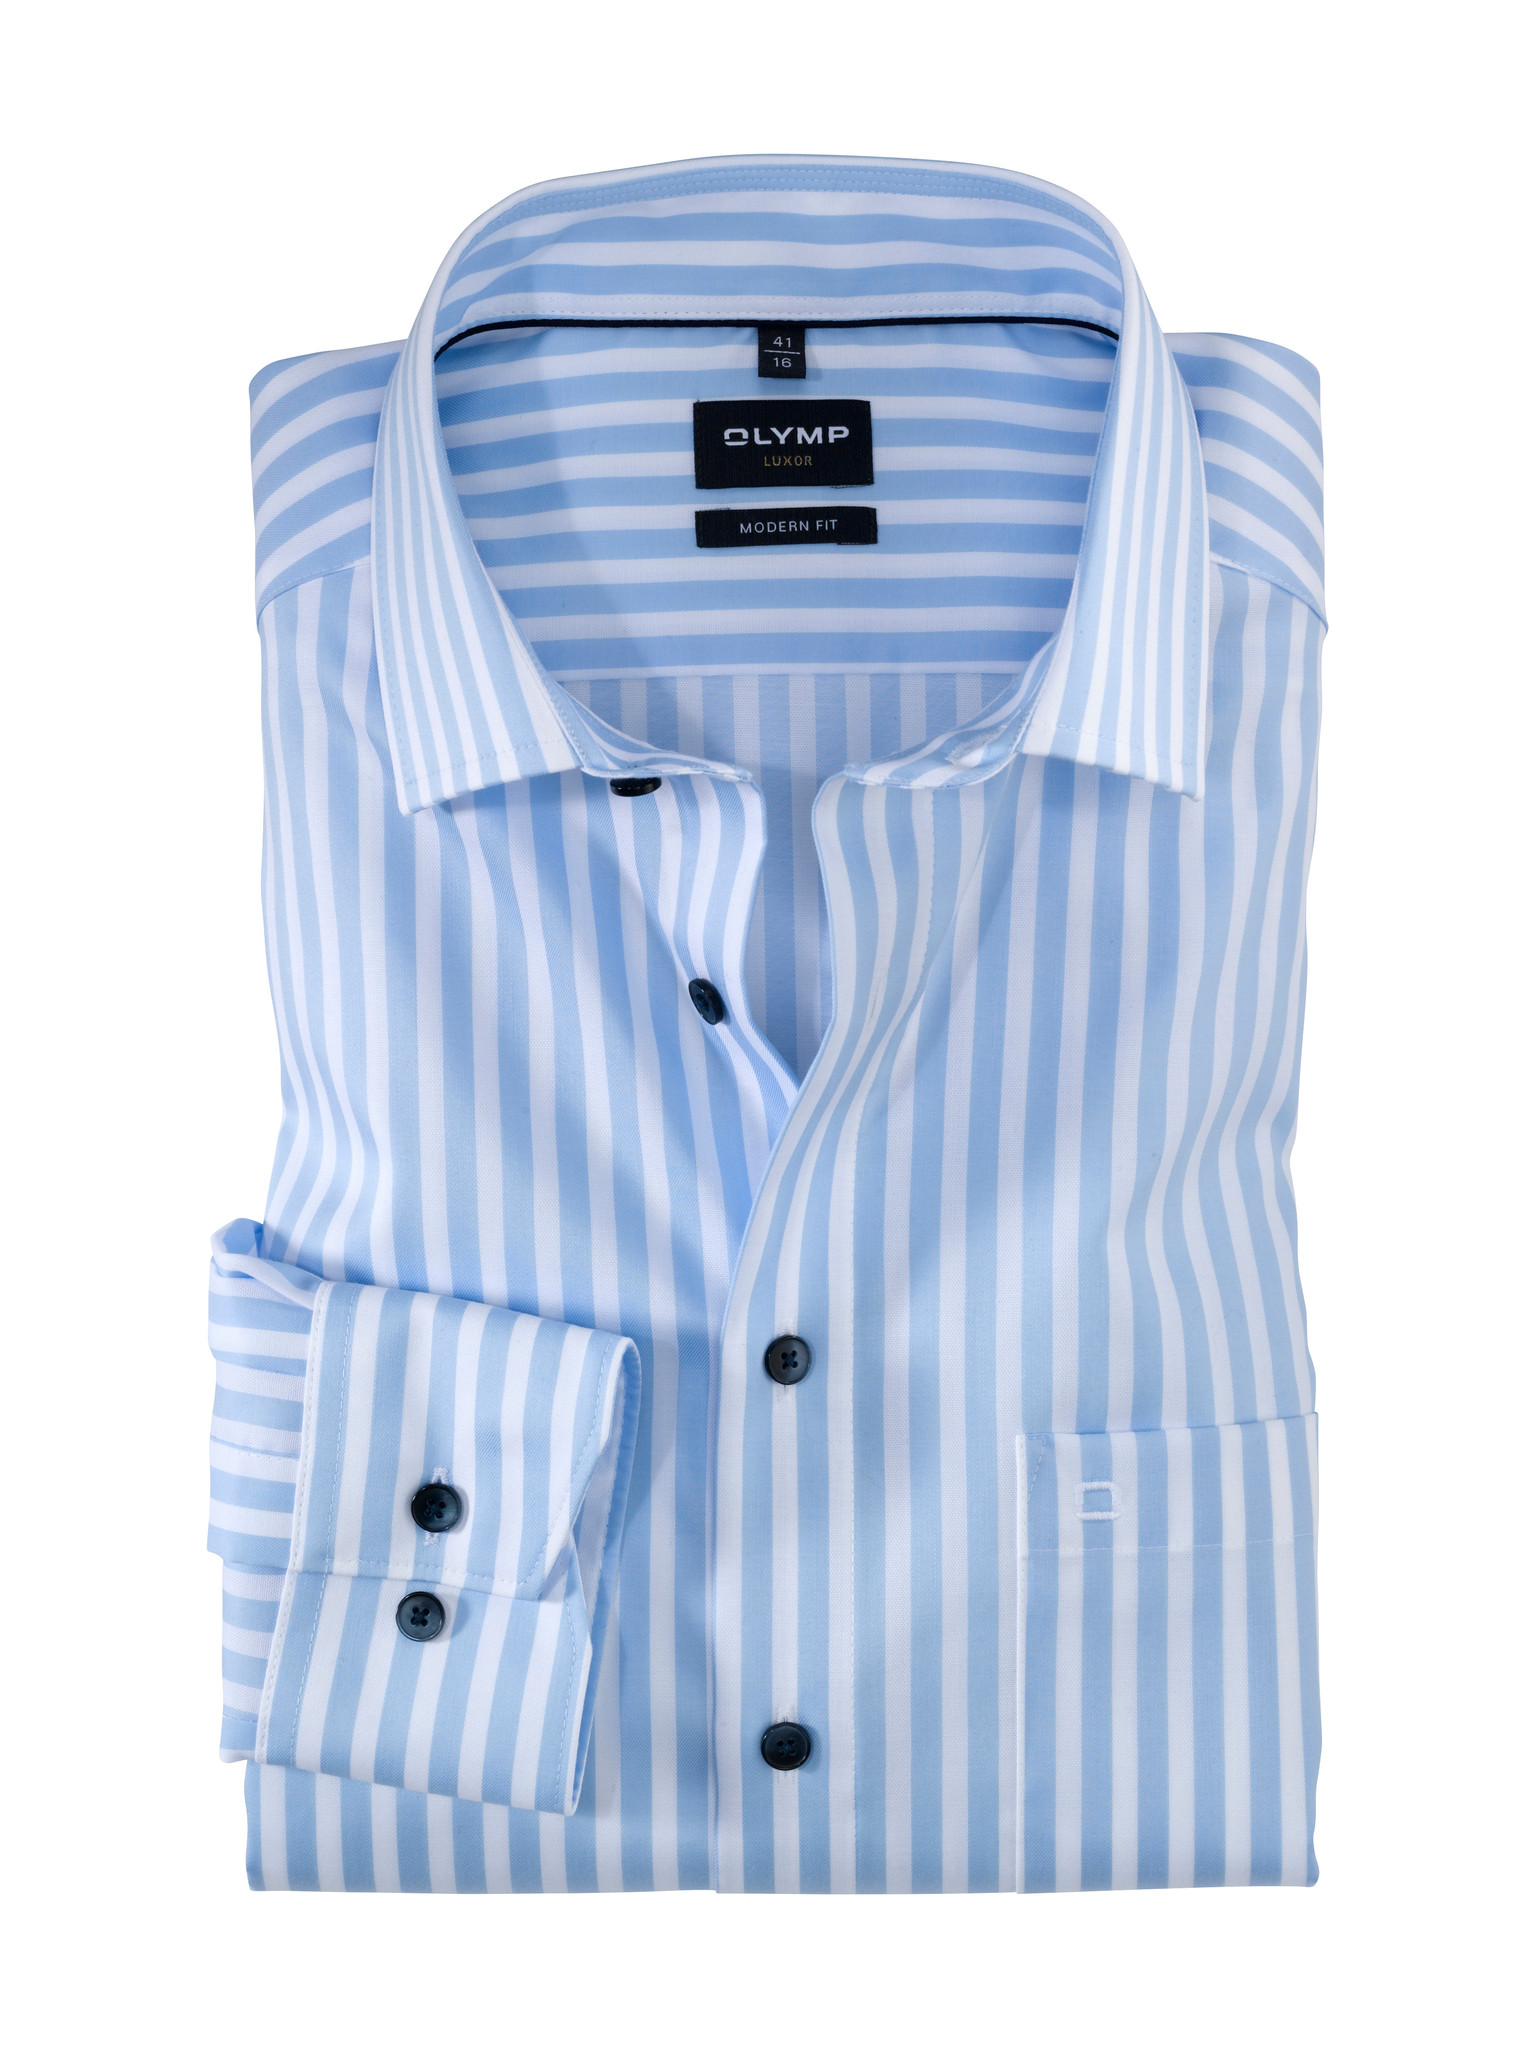 Kreunt wij nikkel Overhemd Modern-Fit Streep Blauw Wit 1292 24 10 - Taste For Shirts